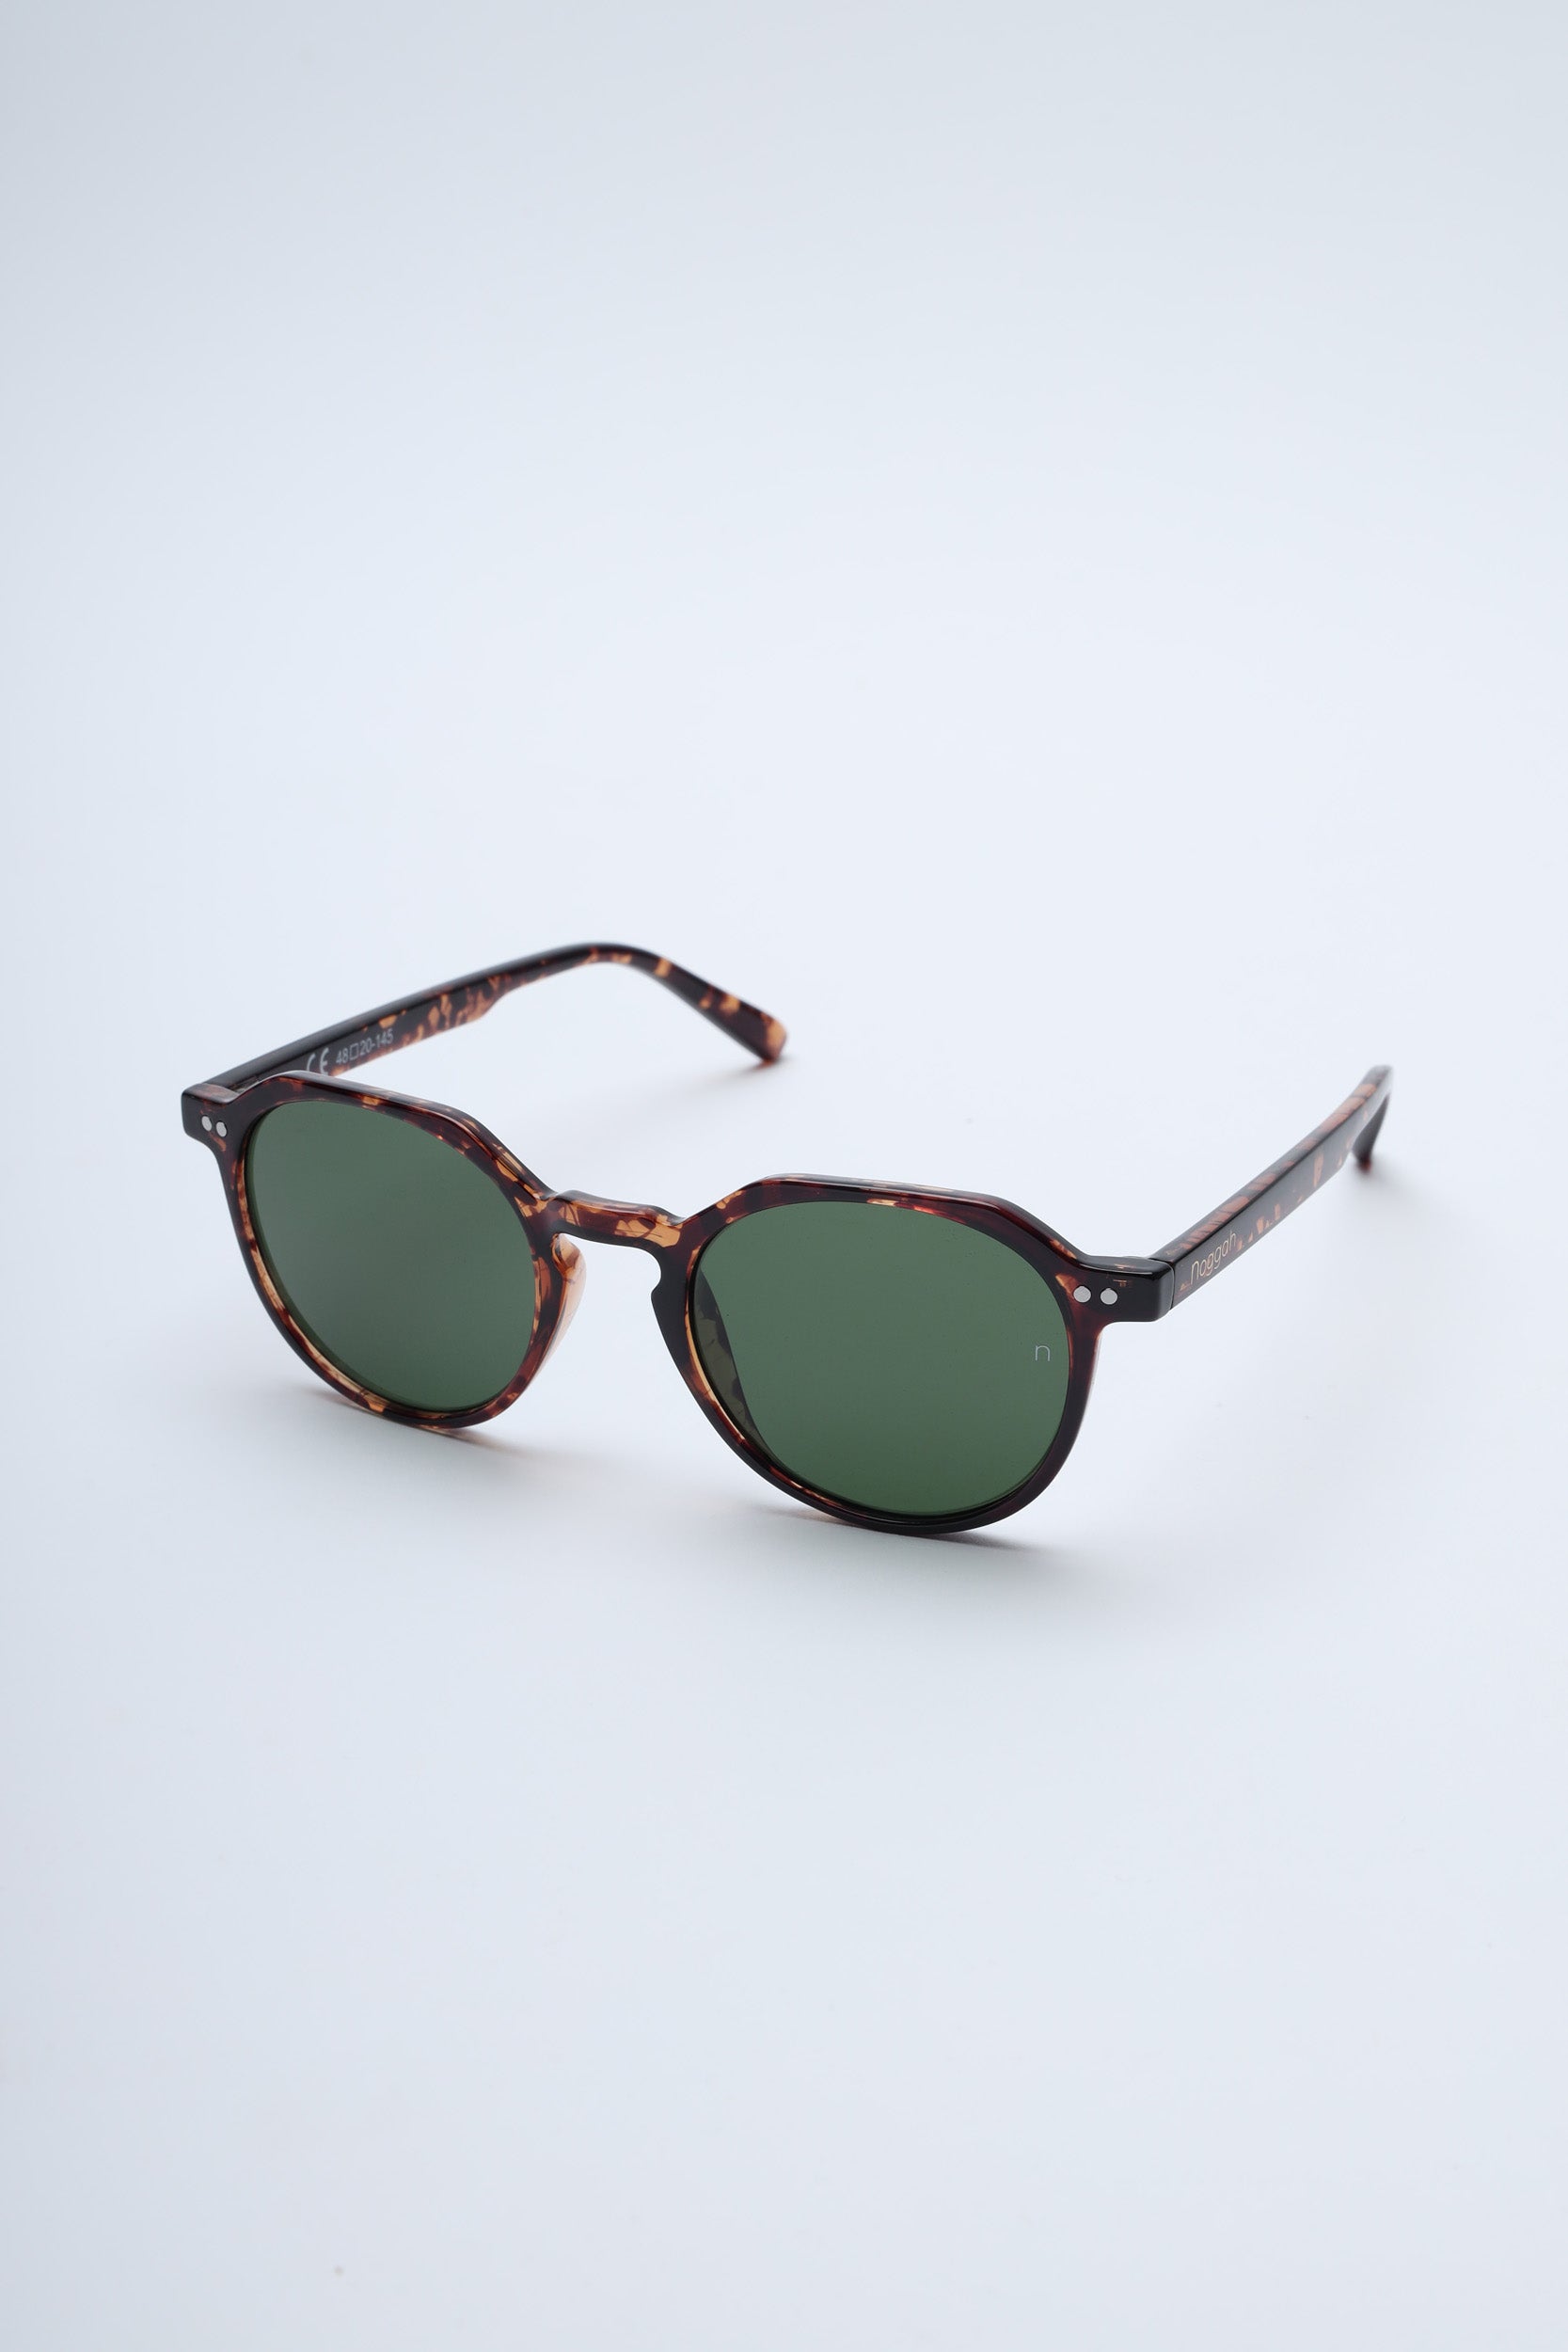 Christian Dior sunglasses BLACKTIE-154-FS 086/HA